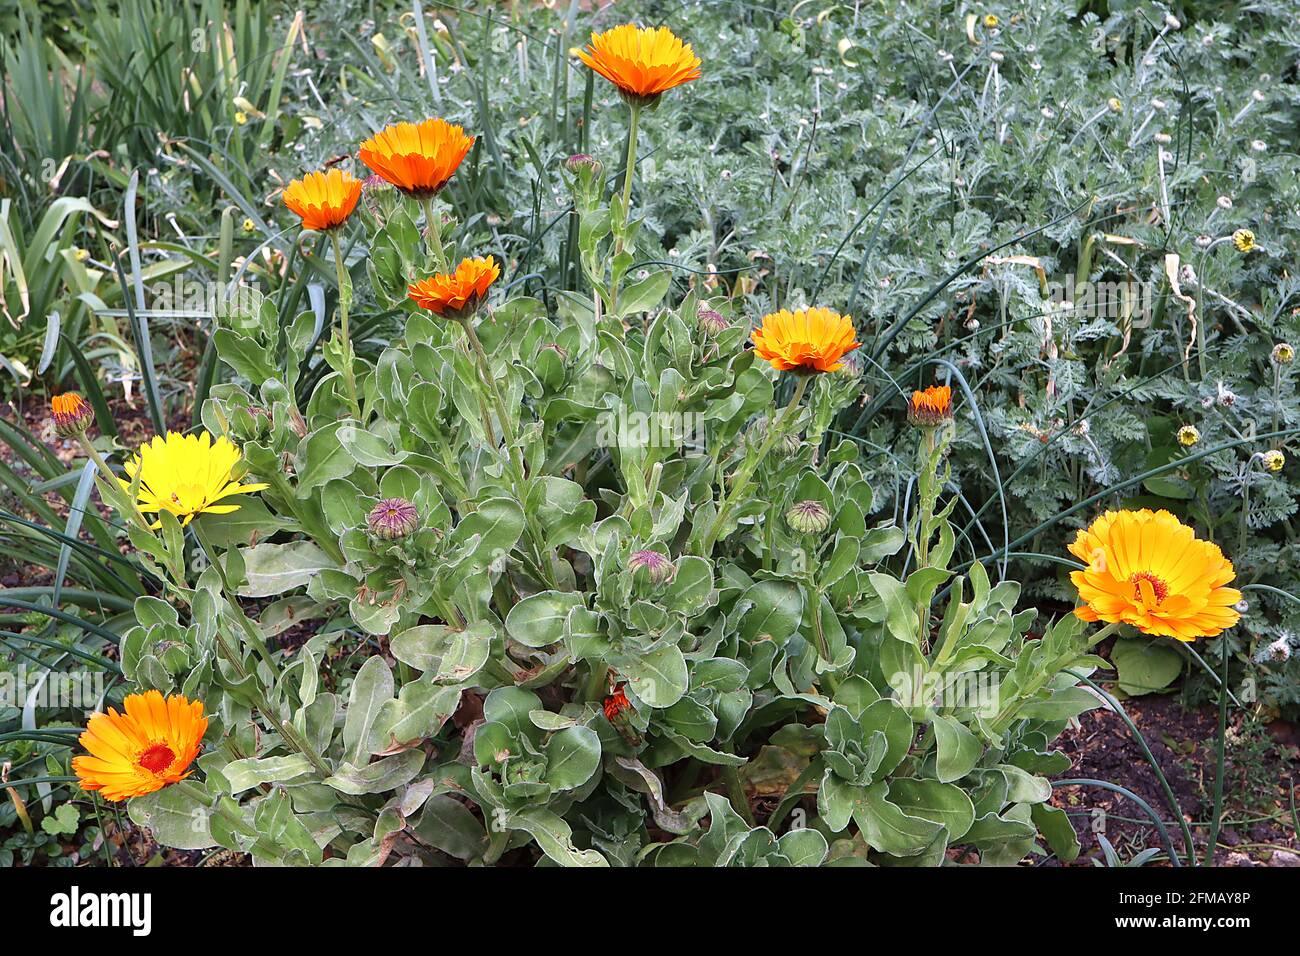 Calendula officinalis  Pot marigold – orange and yellow daisy-like flowers with medicinal properties,  May, England, UK Stock Photo